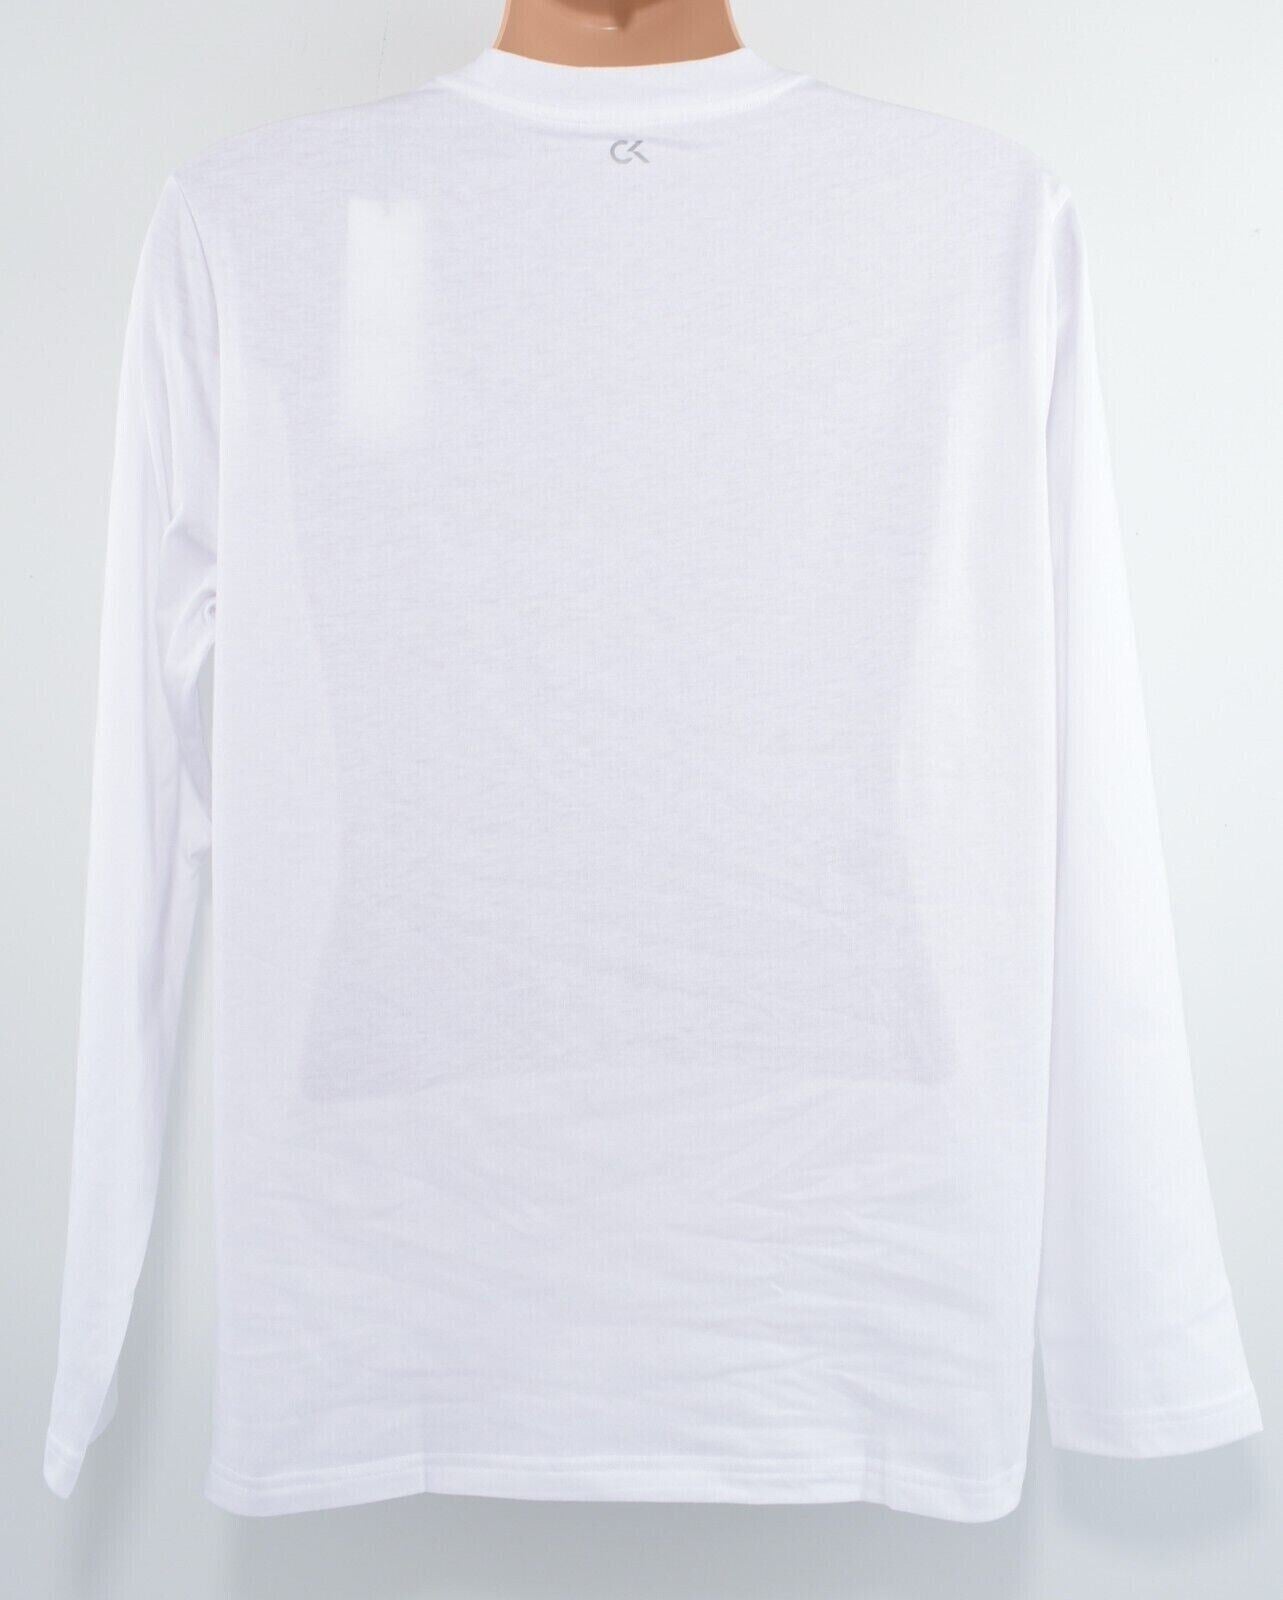 CALVIN KLEIN Performance Men's Long Sleeve T-shirt Top, Bright White, size S